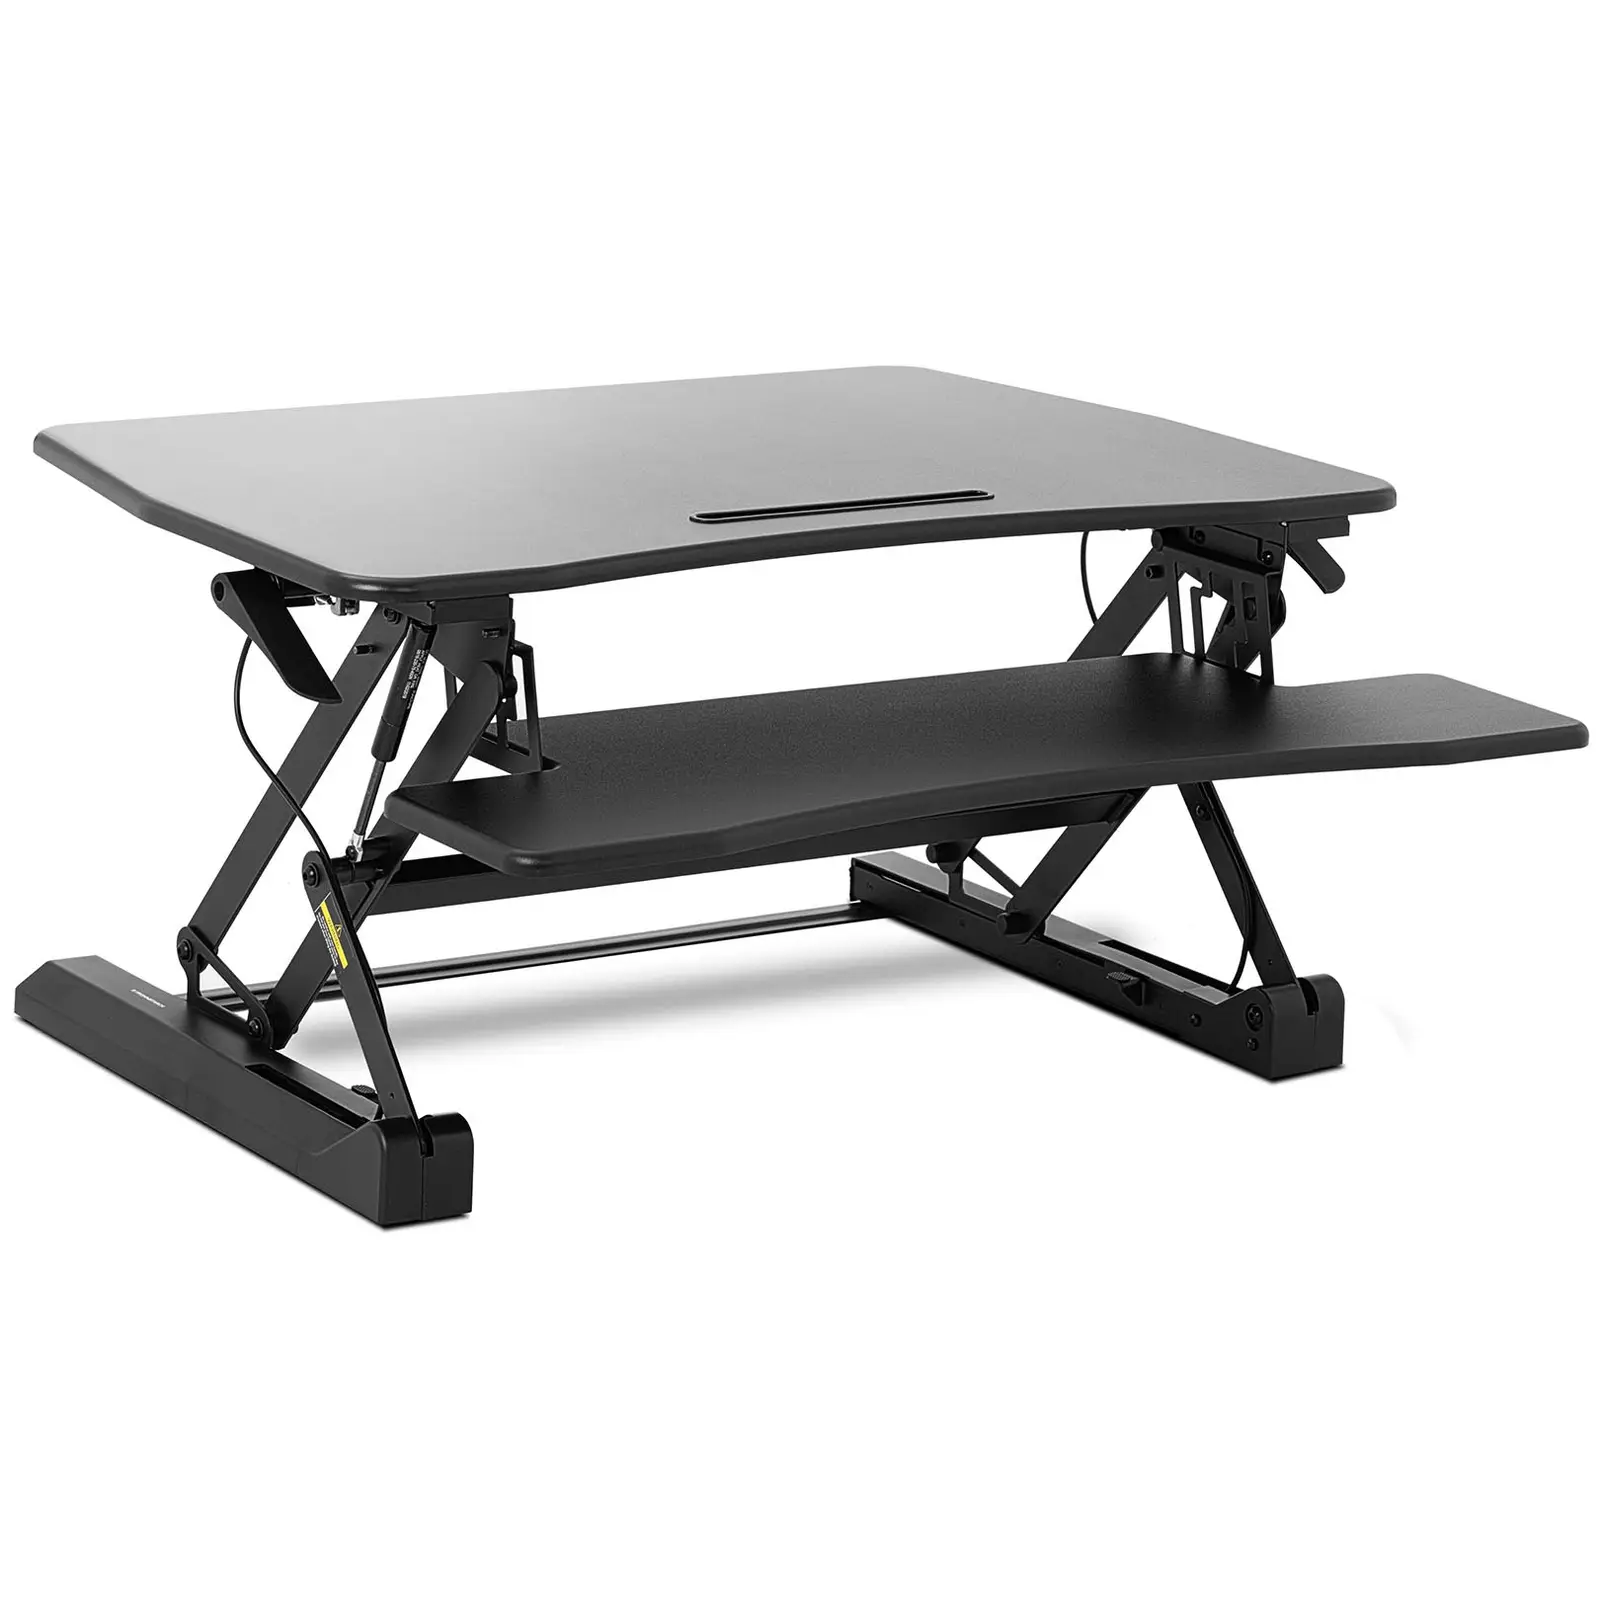 Hev-senk skrivebord - høydejusterbar, 8 trinn - 16,5 cm til 41,5 cm